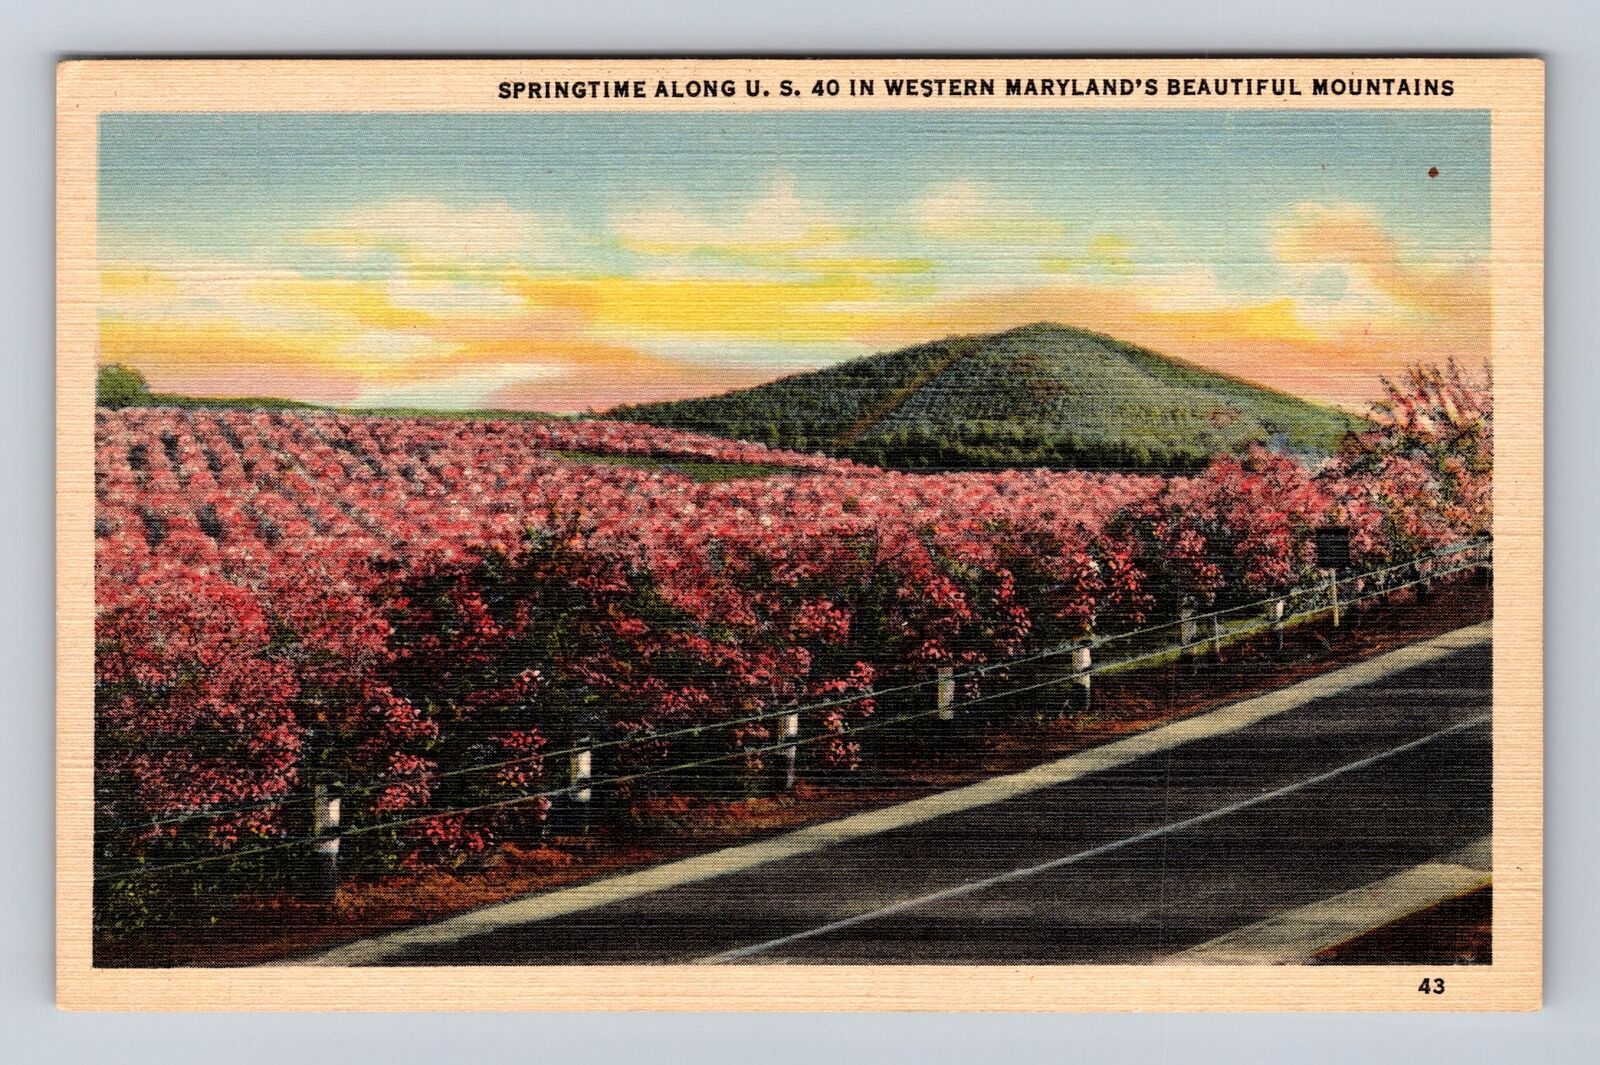 Western Maryland Mountains, Springtime Along U.S. Route 40, Vintage Postcard